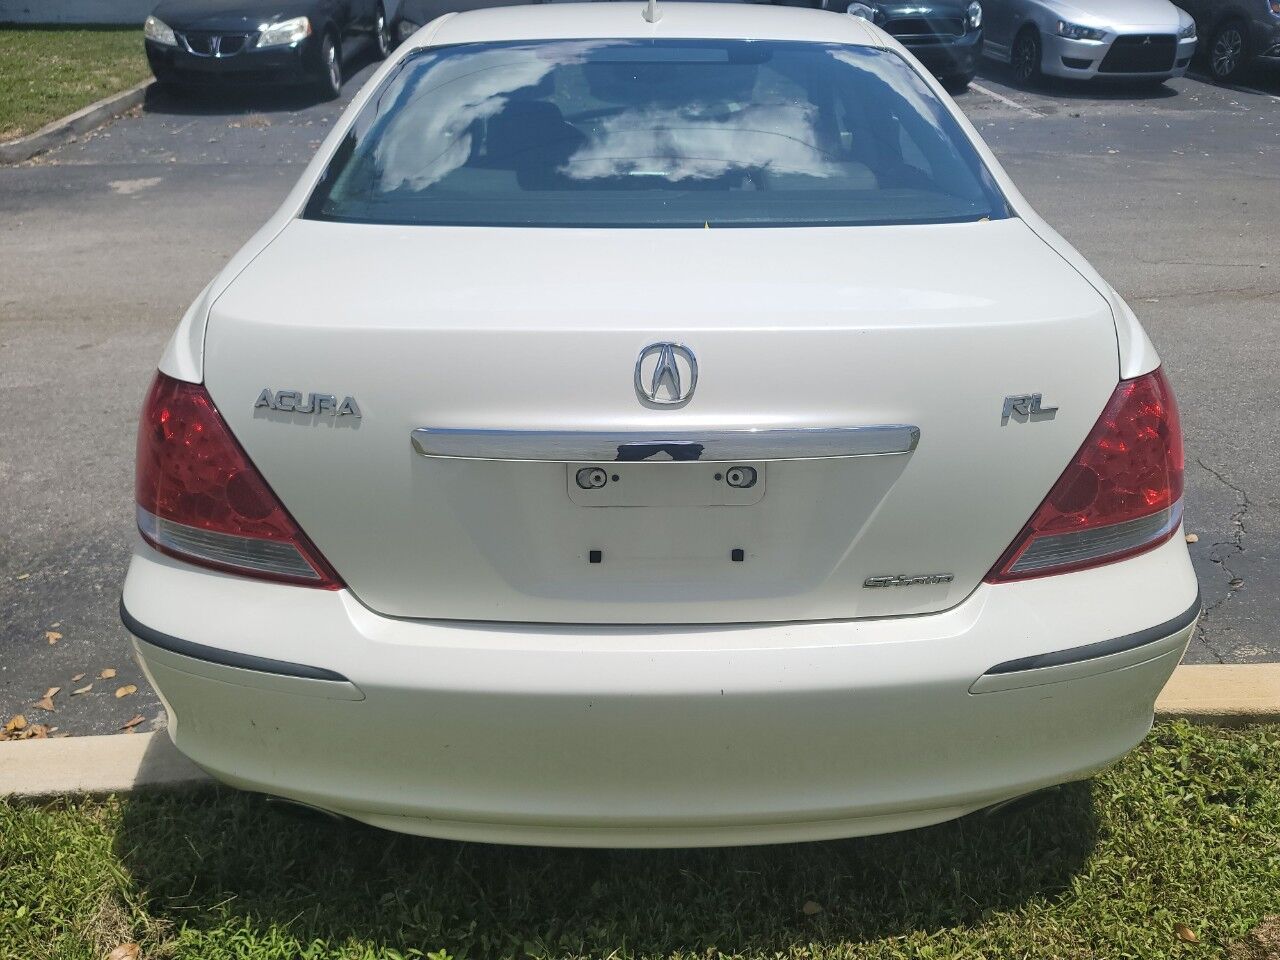 2006 ACURA RL Sedan - $6,990